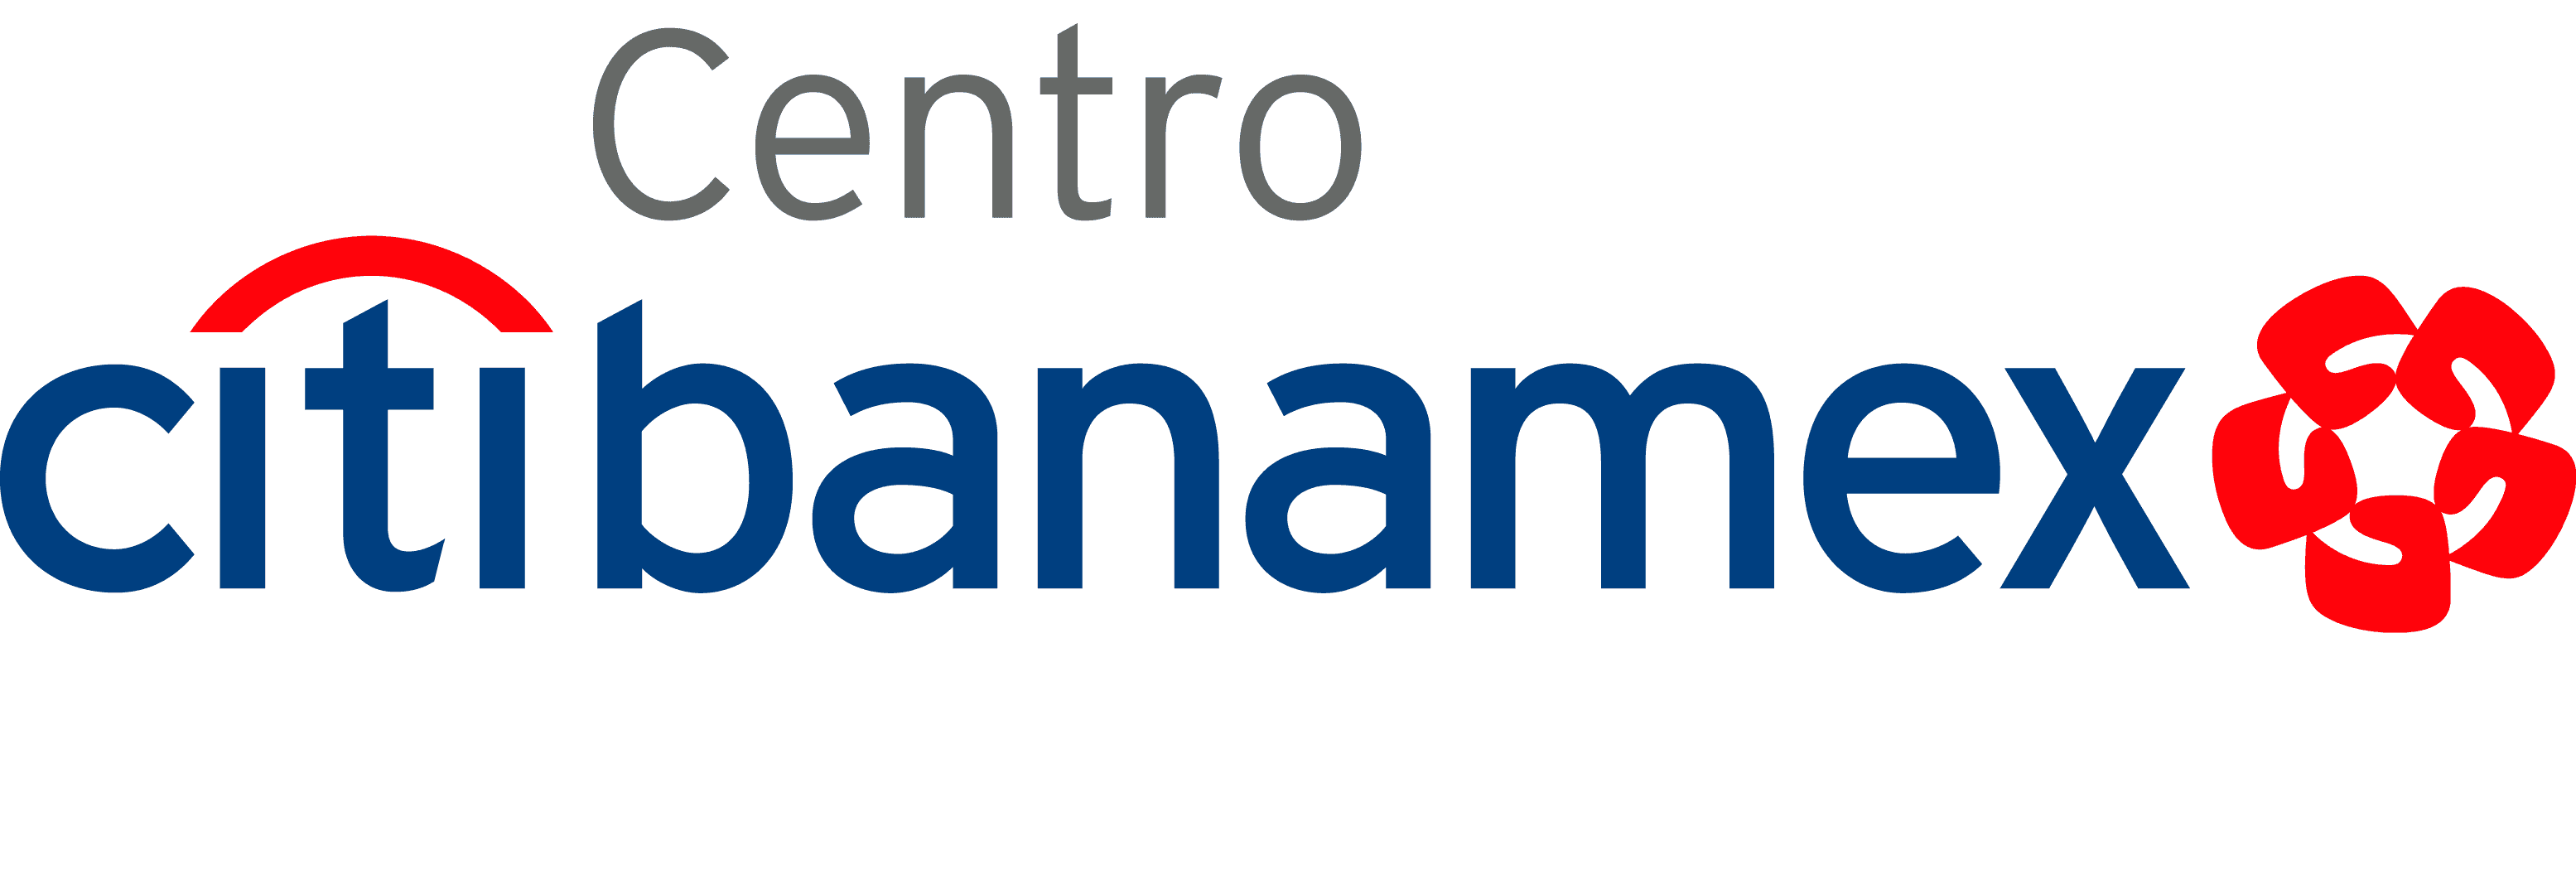 Centro CitiBanamex